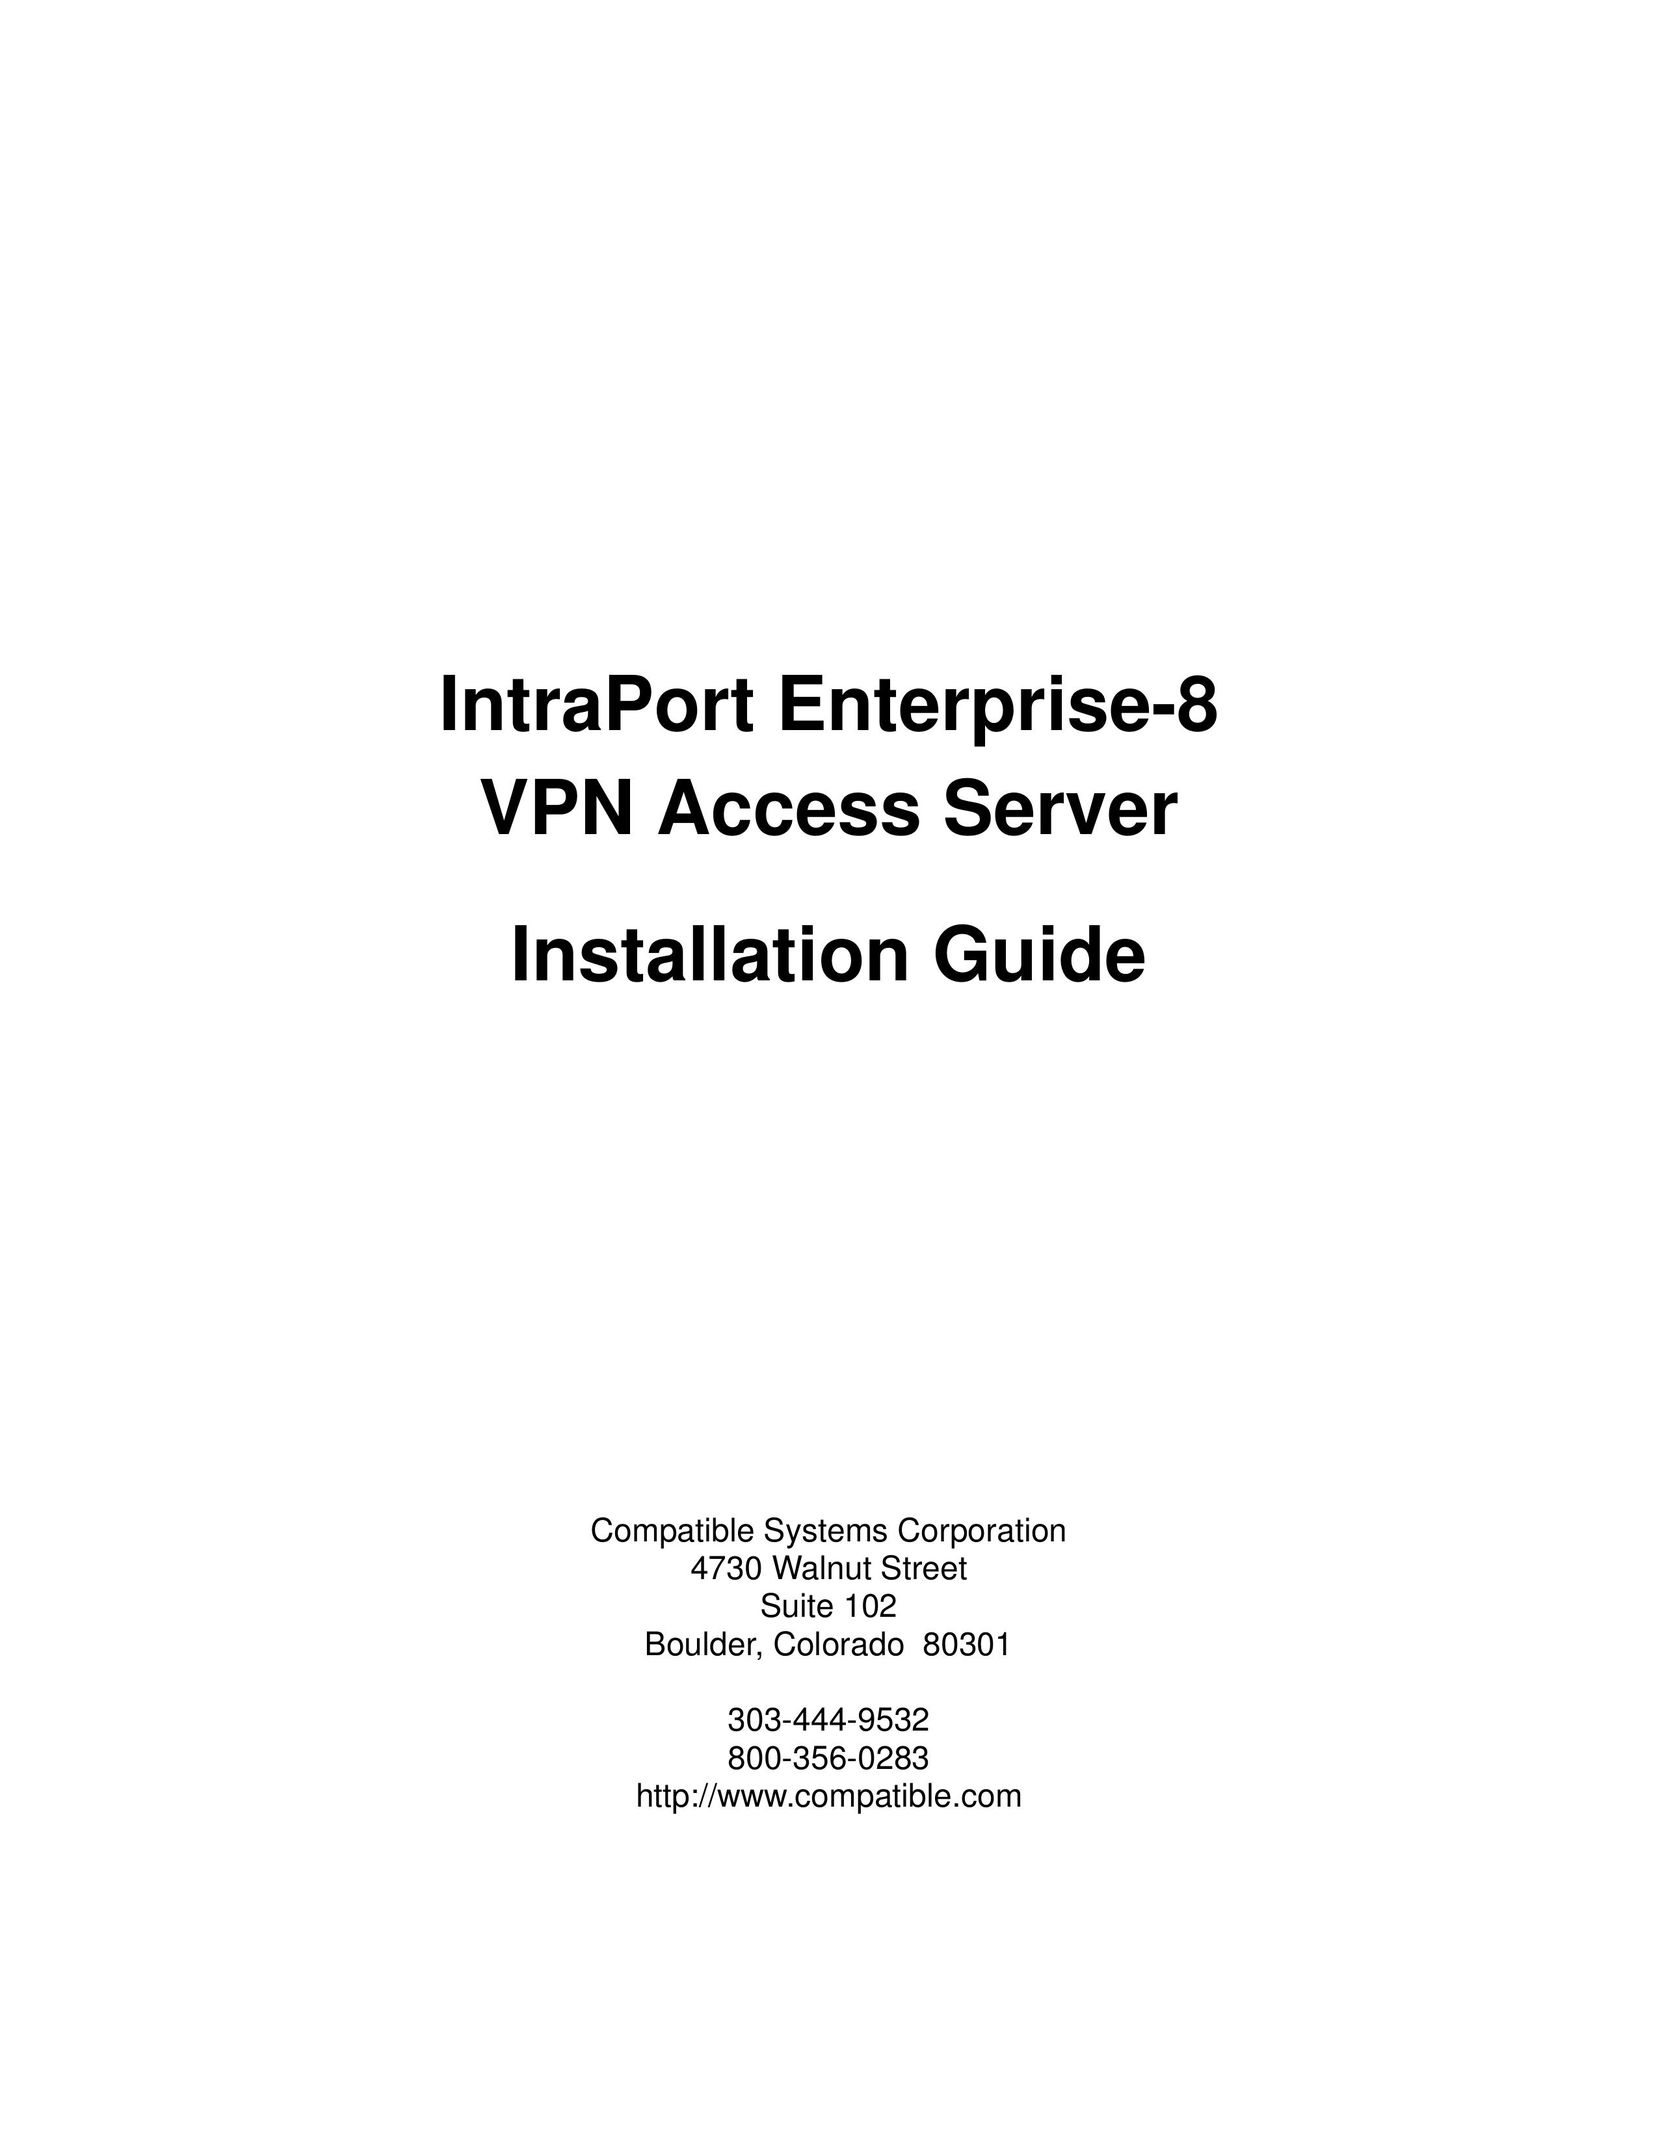 Compatible Systems Enterprise-8 Server User Manual